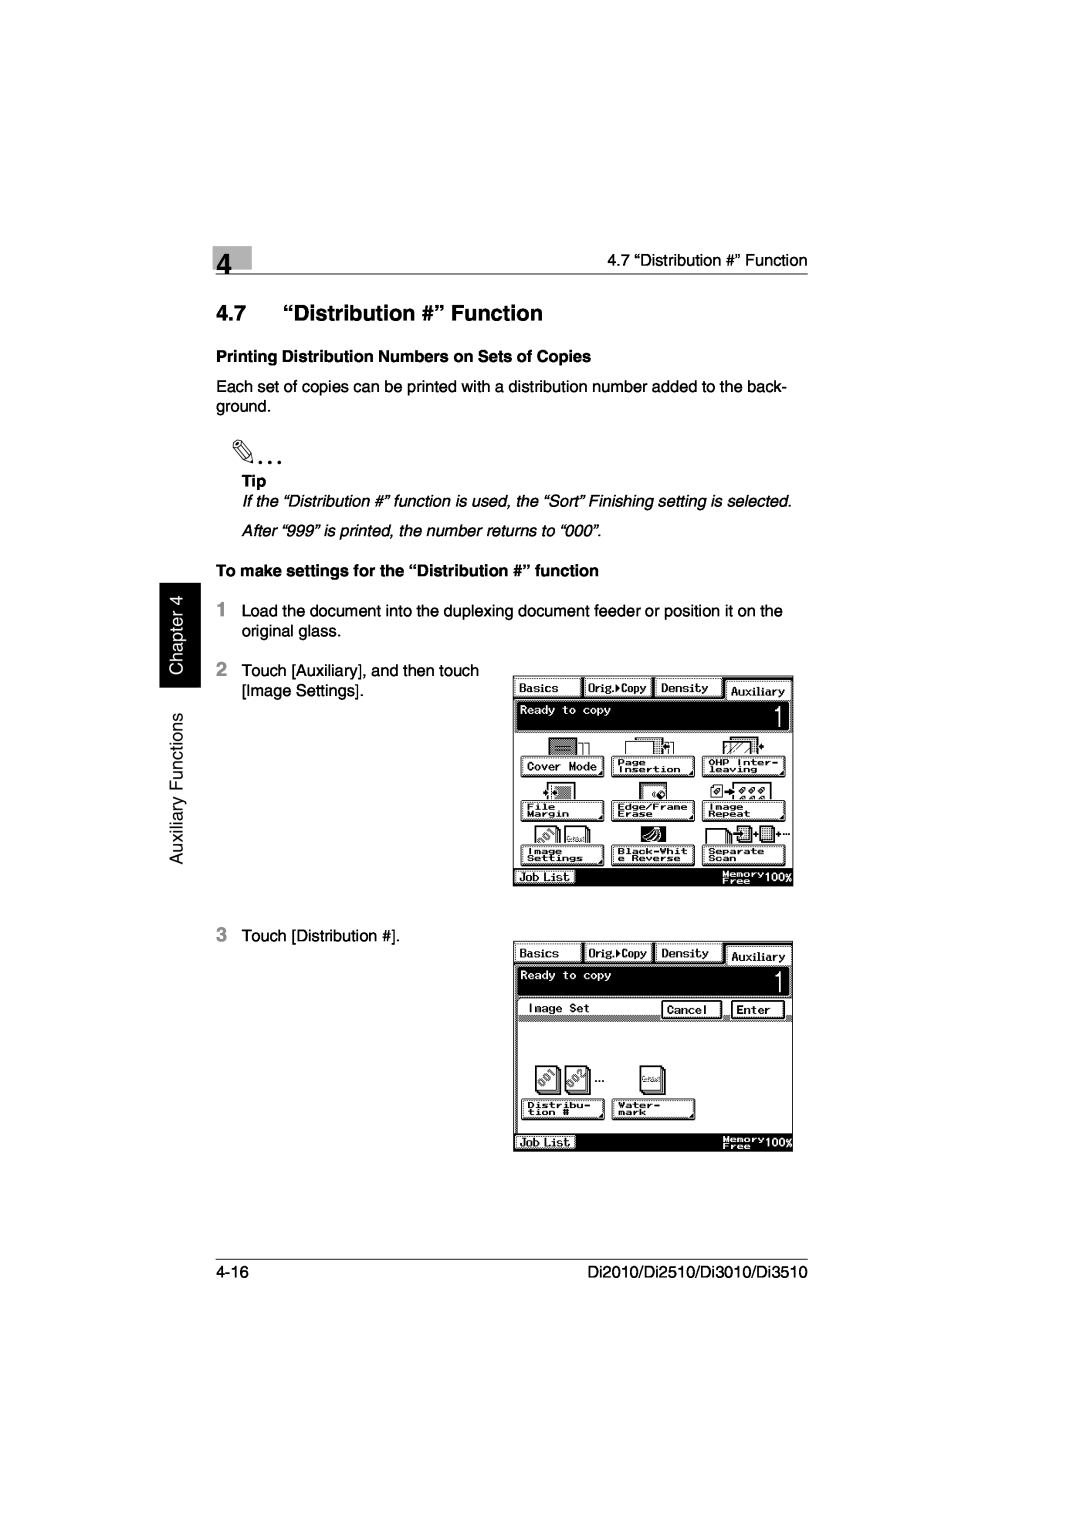 Minolta DI2010, DI2510, DI3010, Di3510 user manual 4.7 “Distribution #” Function, Auxiliary Functions Chapter 